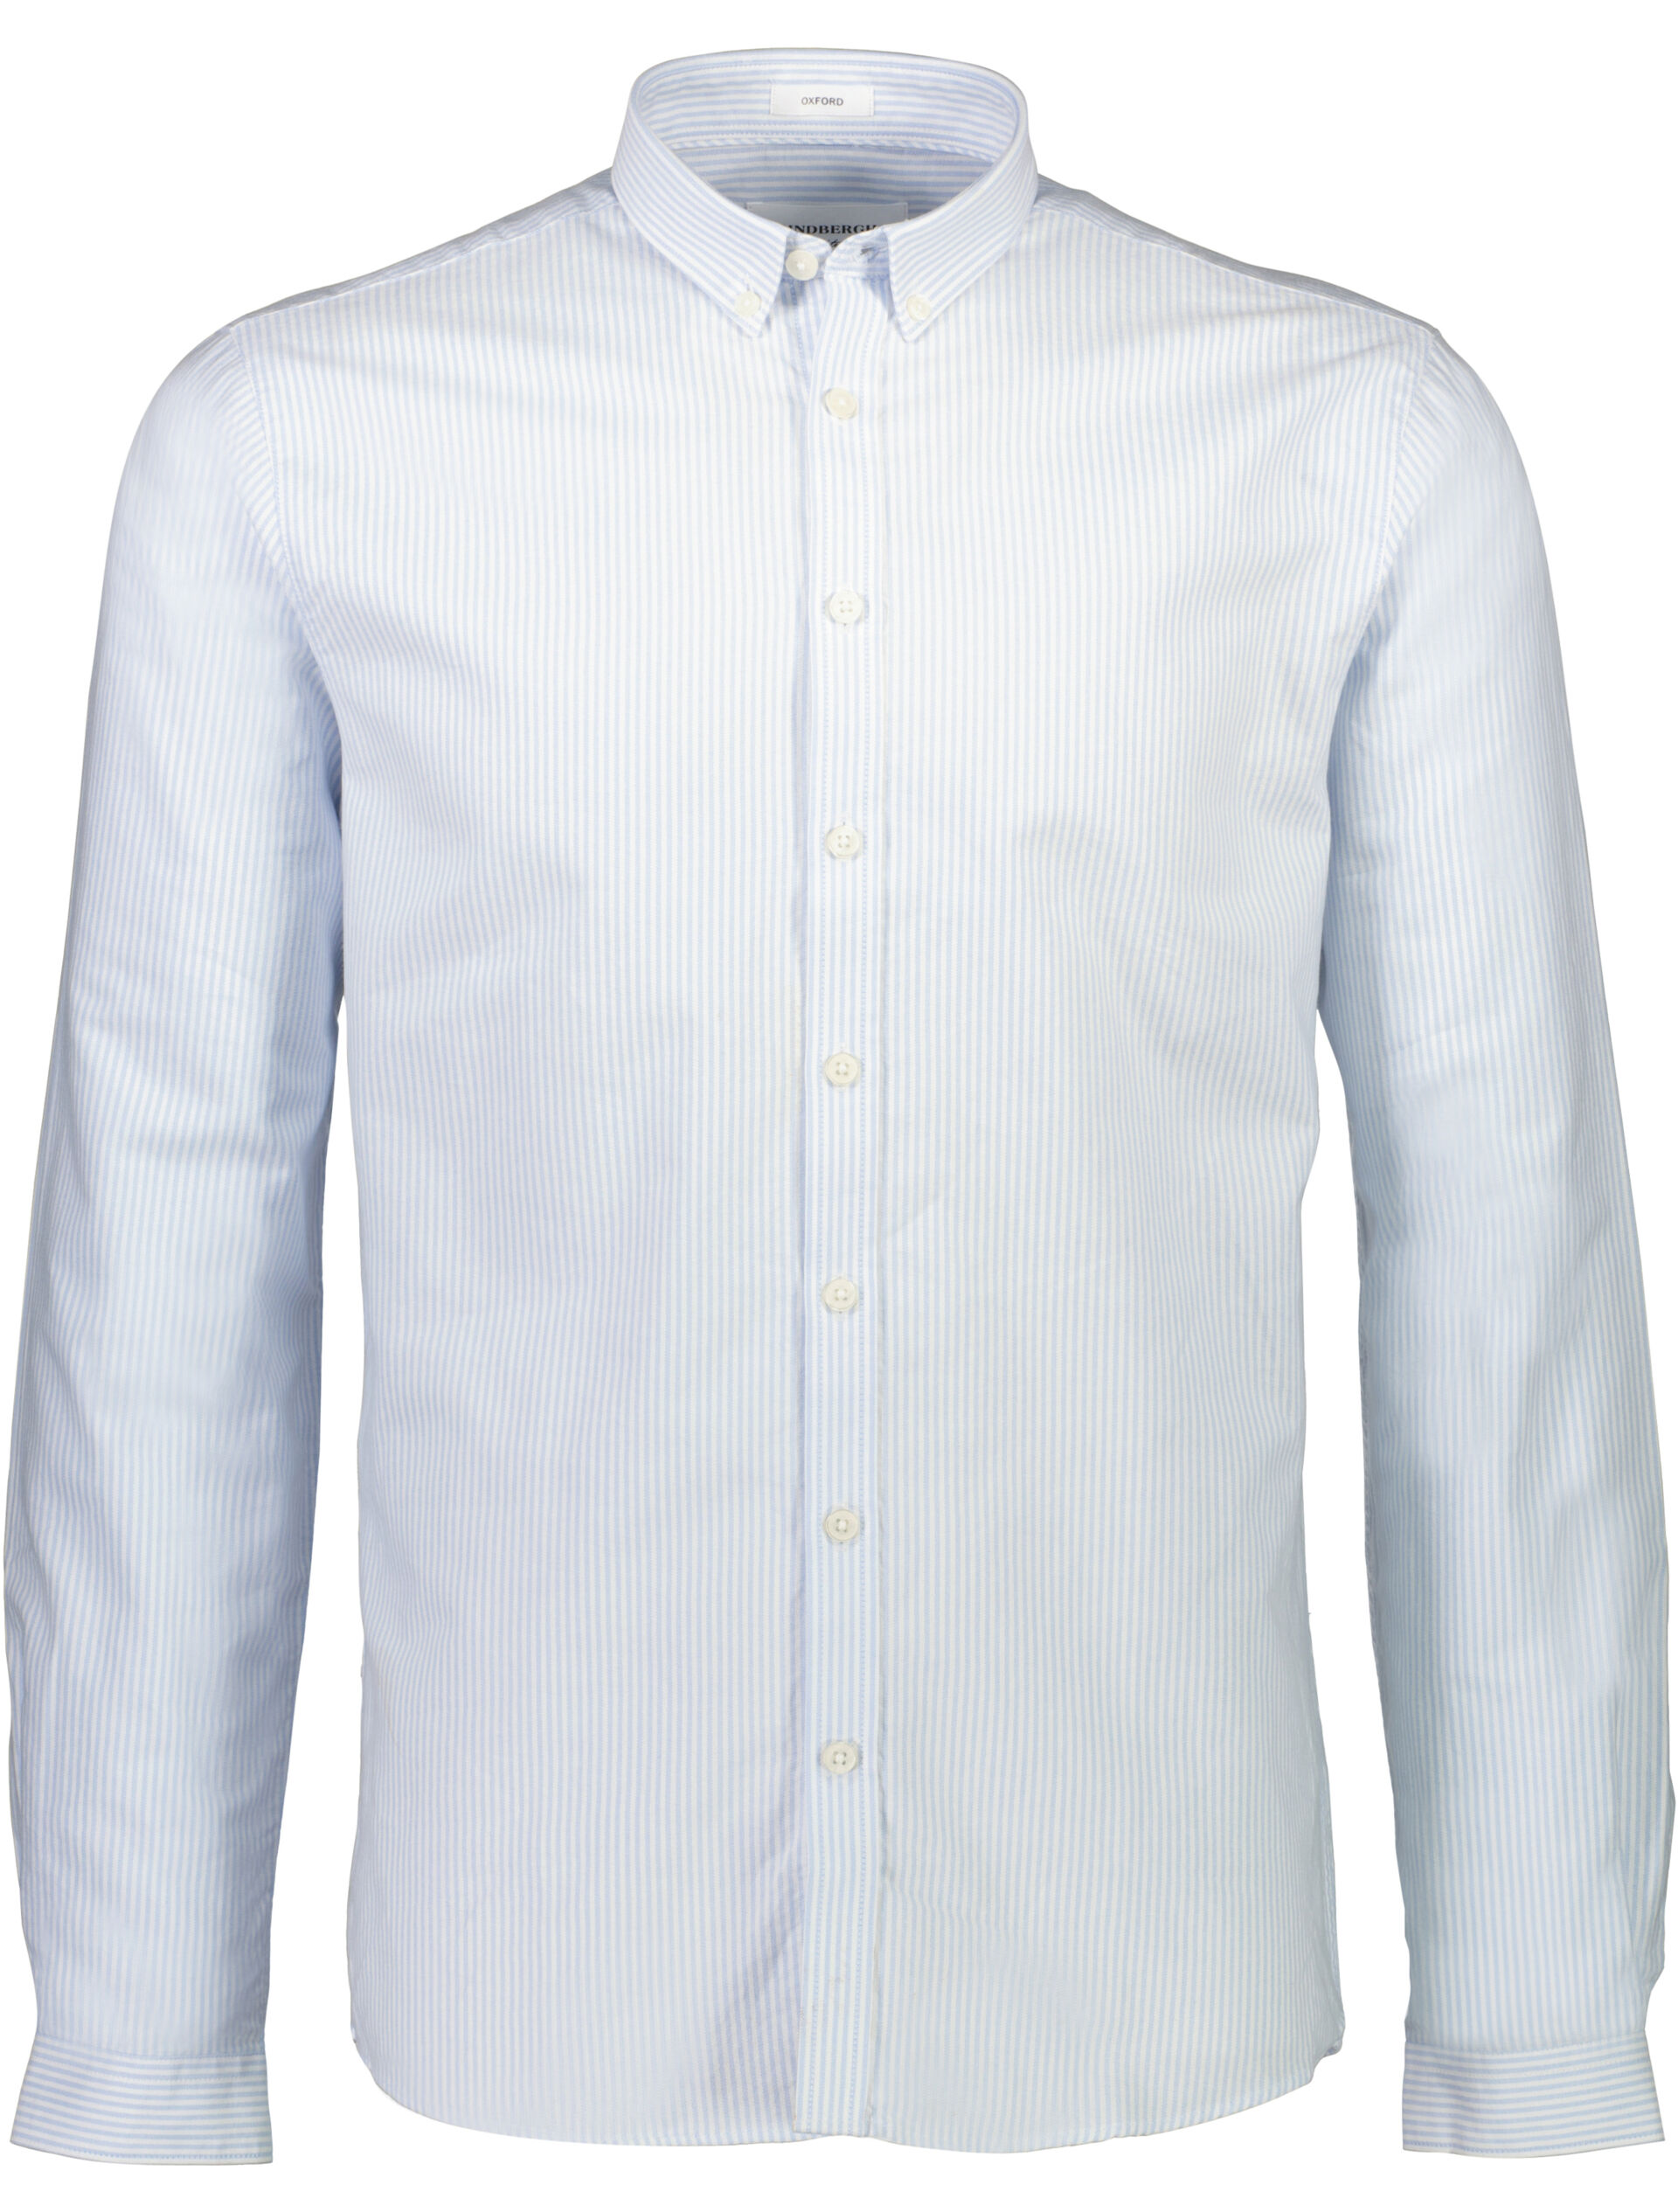 Oxford shirt 30-29040